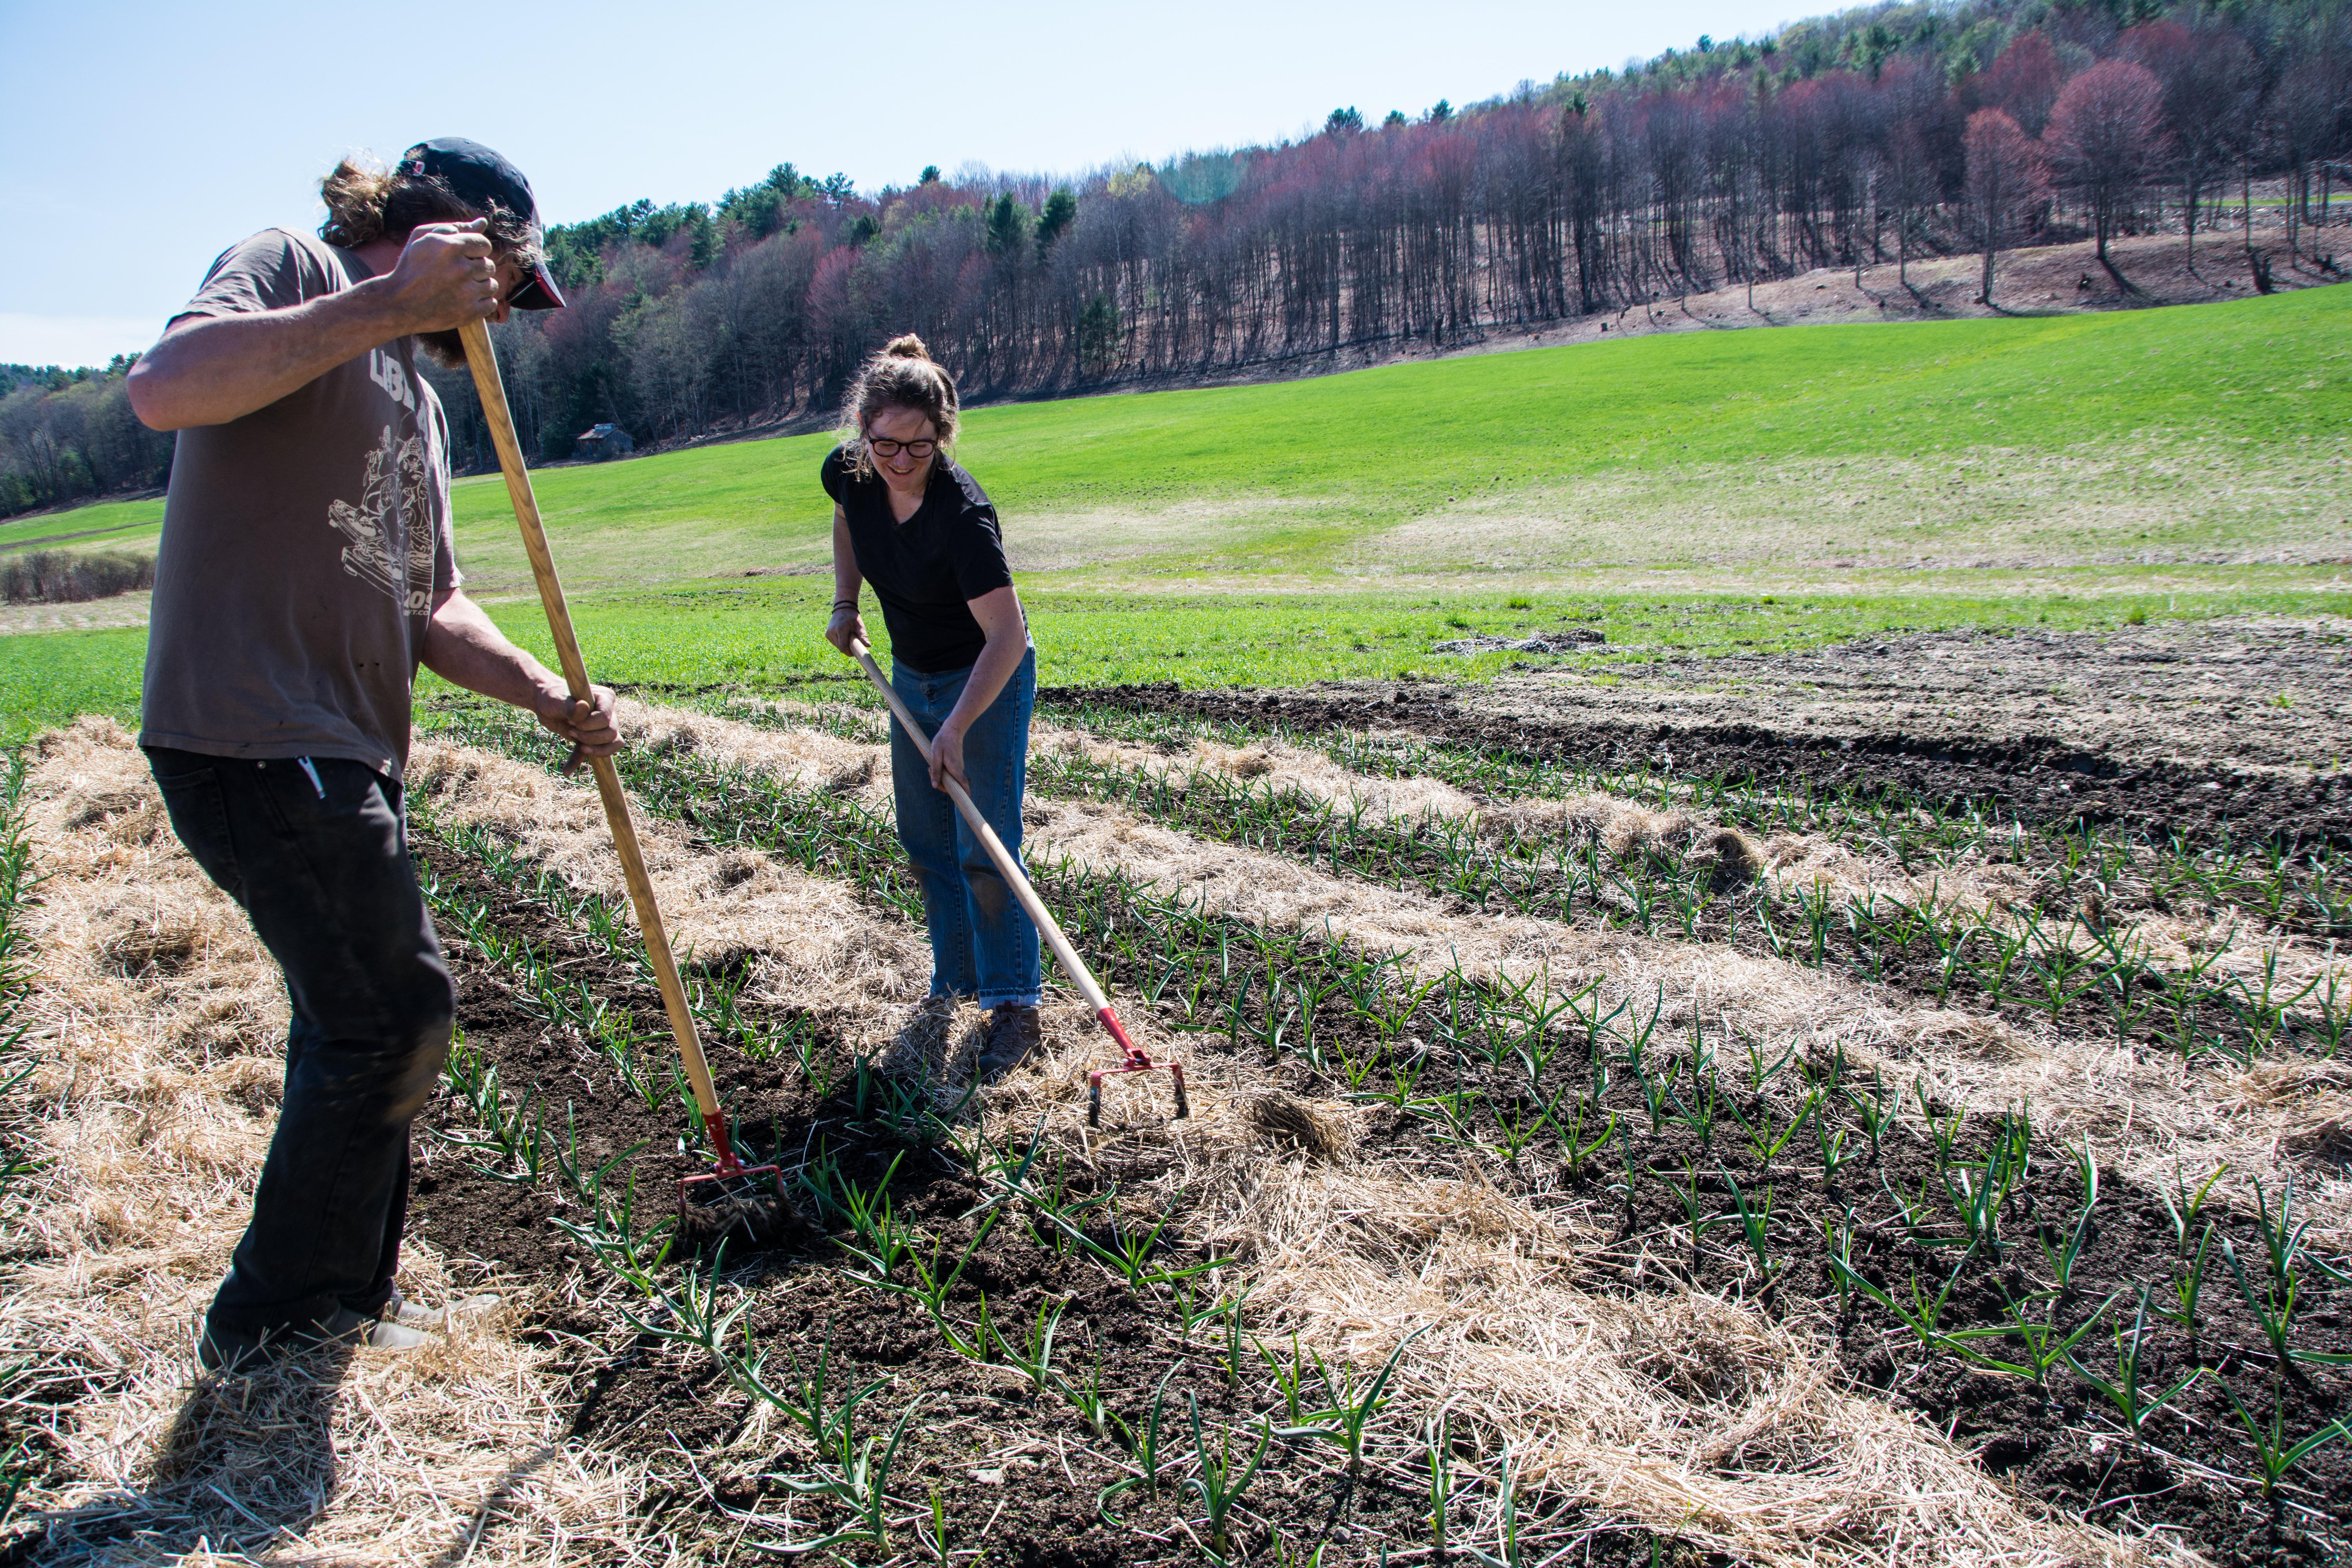 Two farmers laugh while raking a field